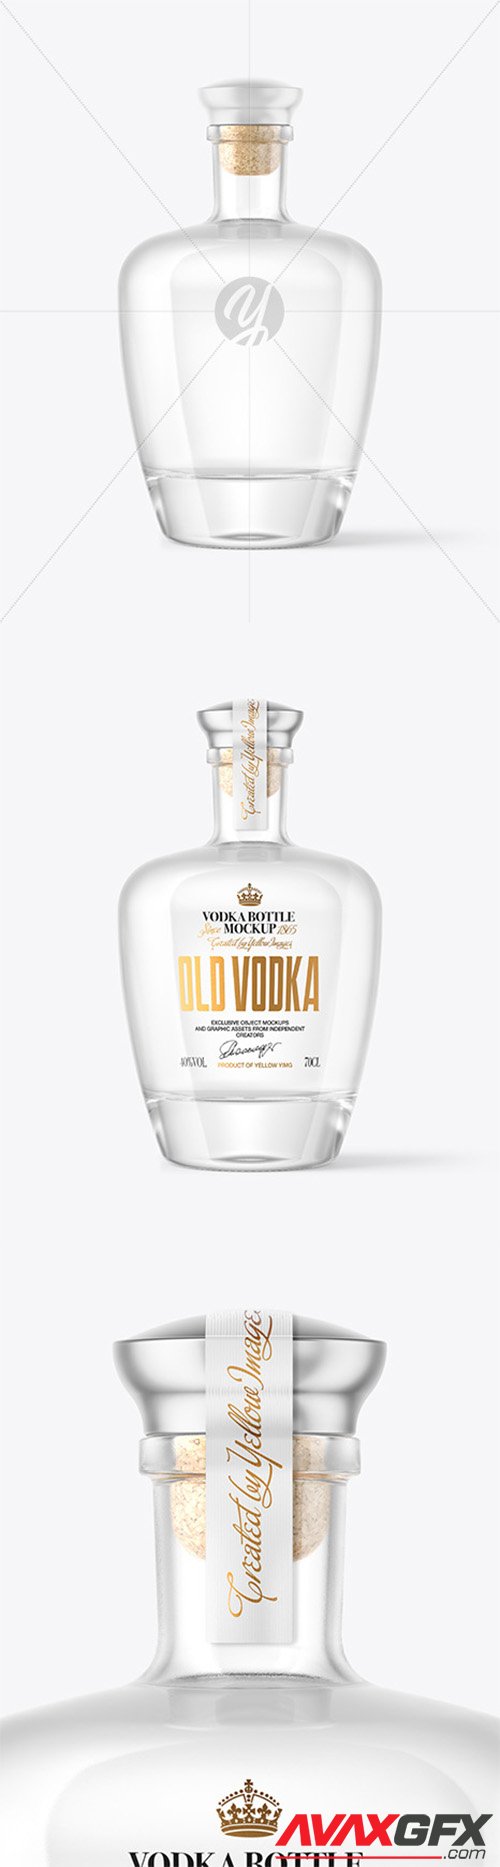 Clear Glass Vodka Bottle Mockup 63867